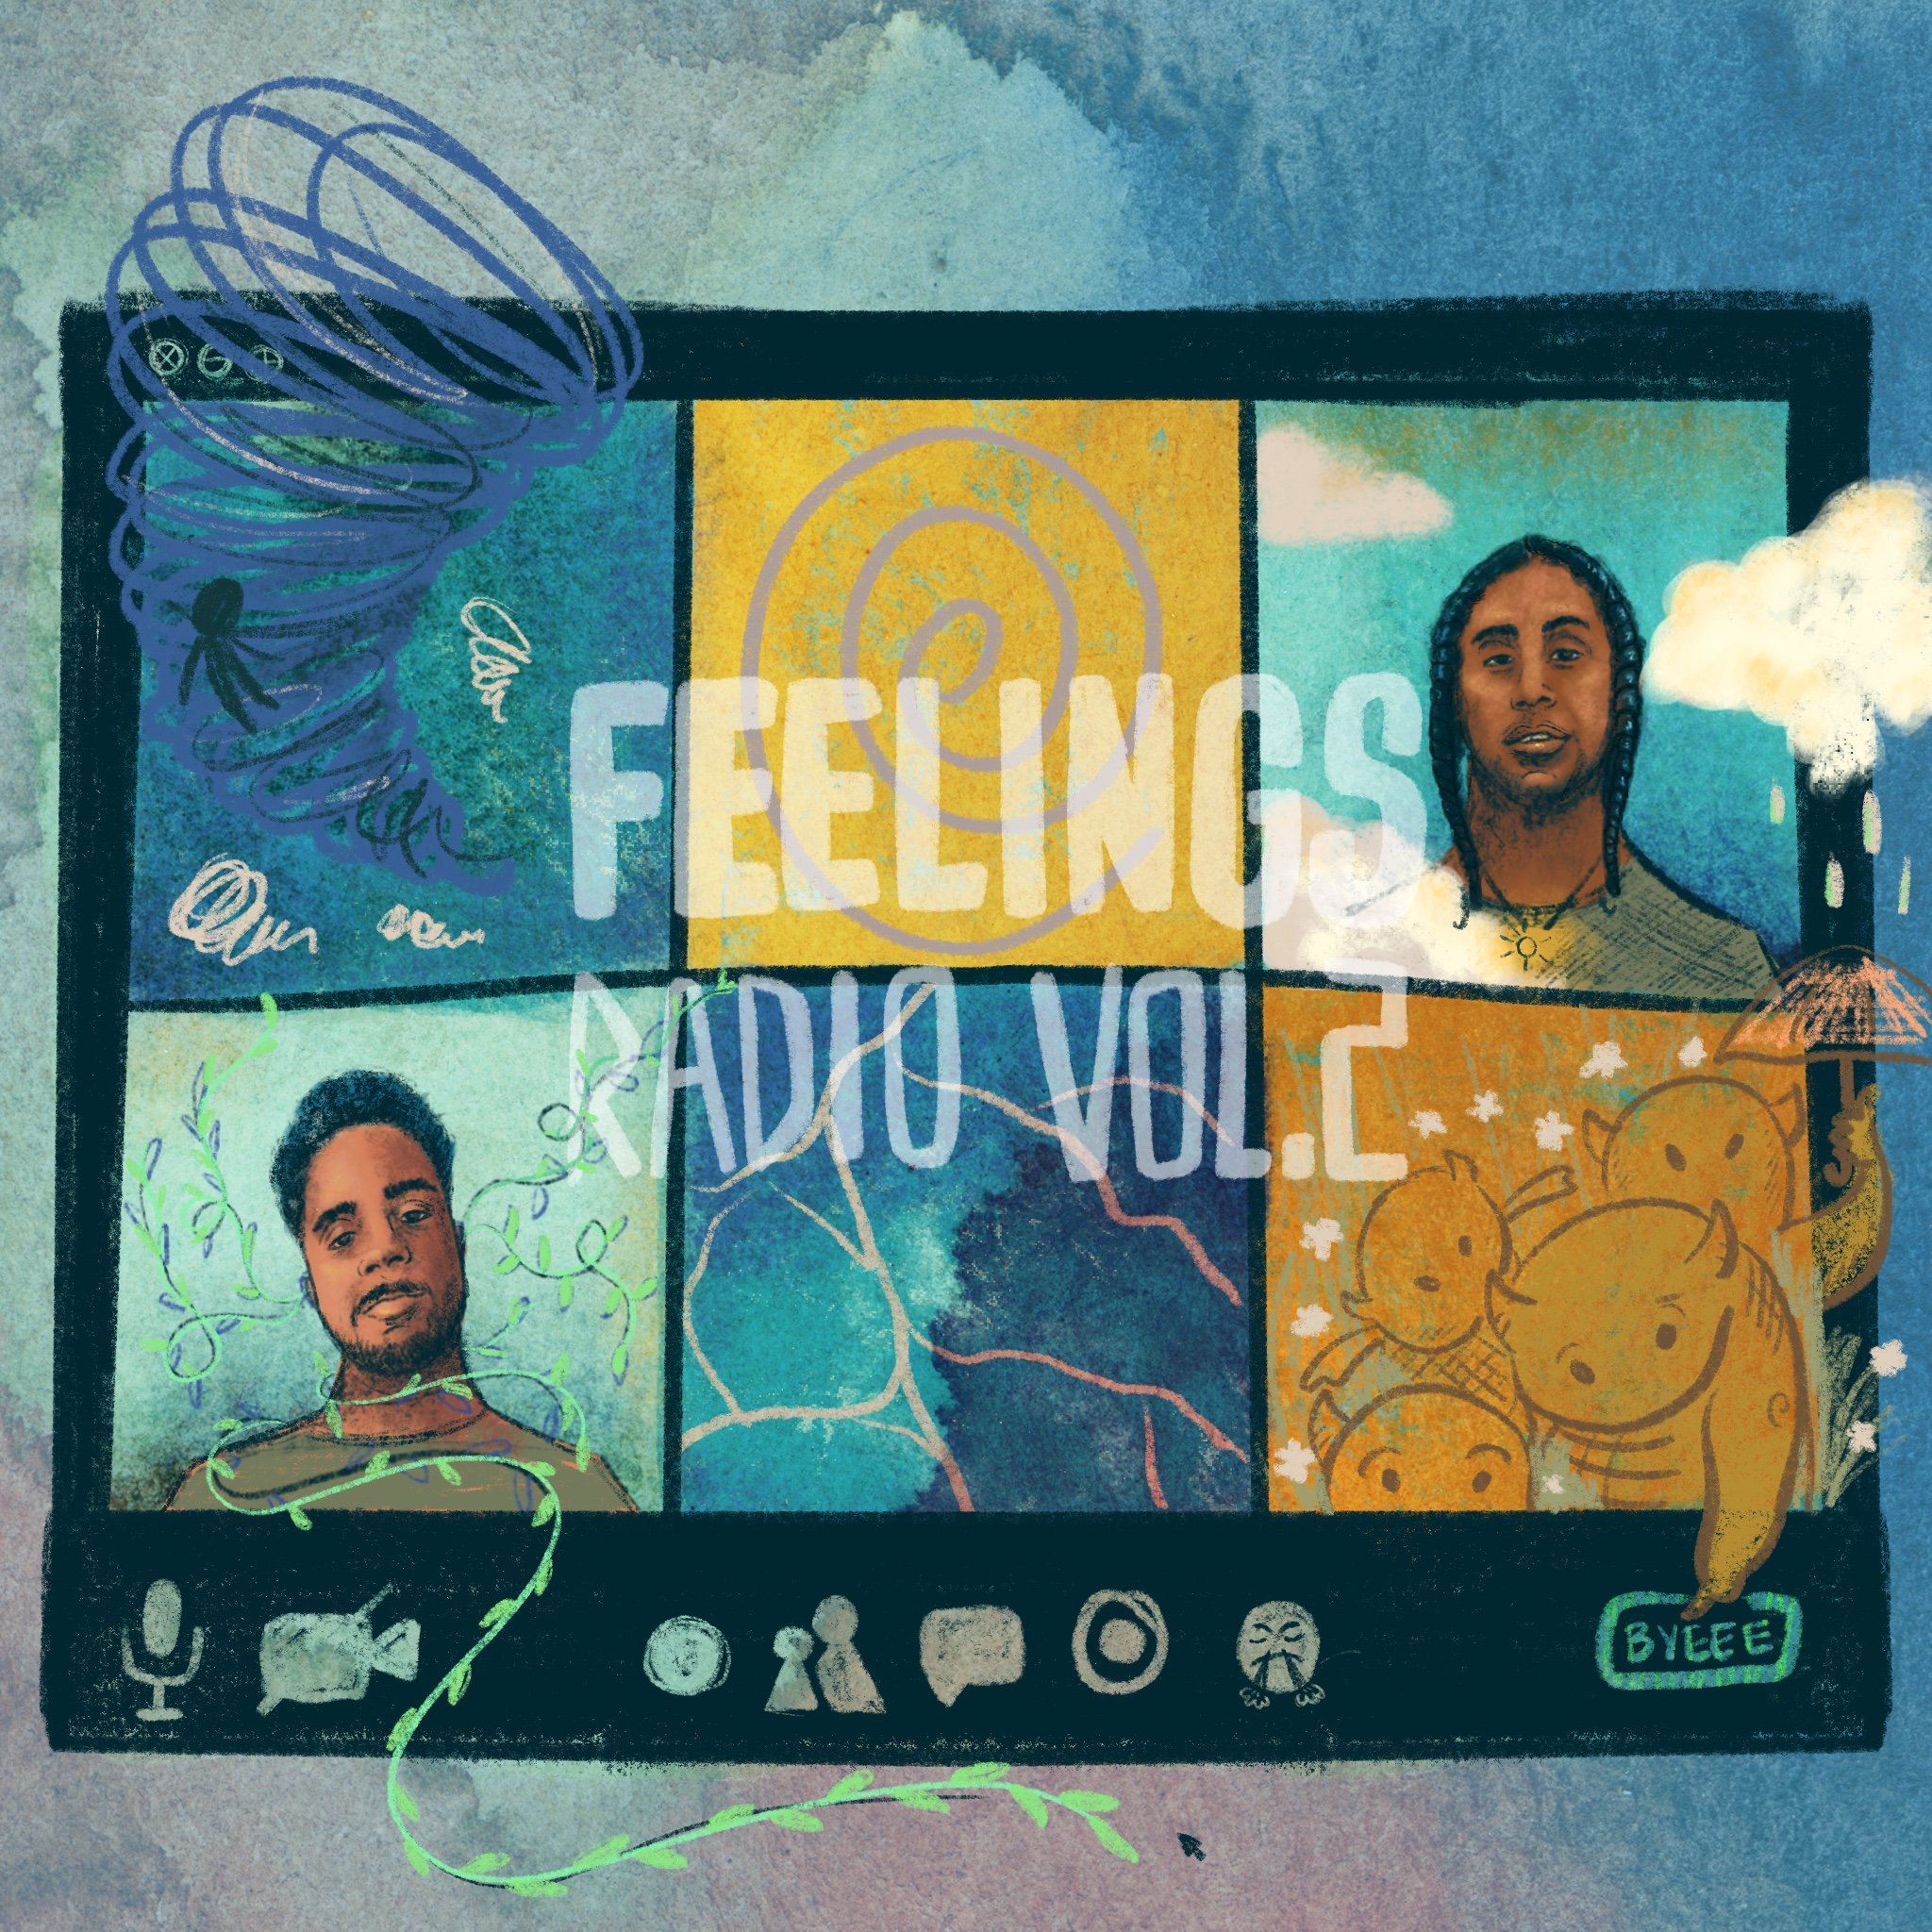   "Feelings Radio Vol. 2" Cover   